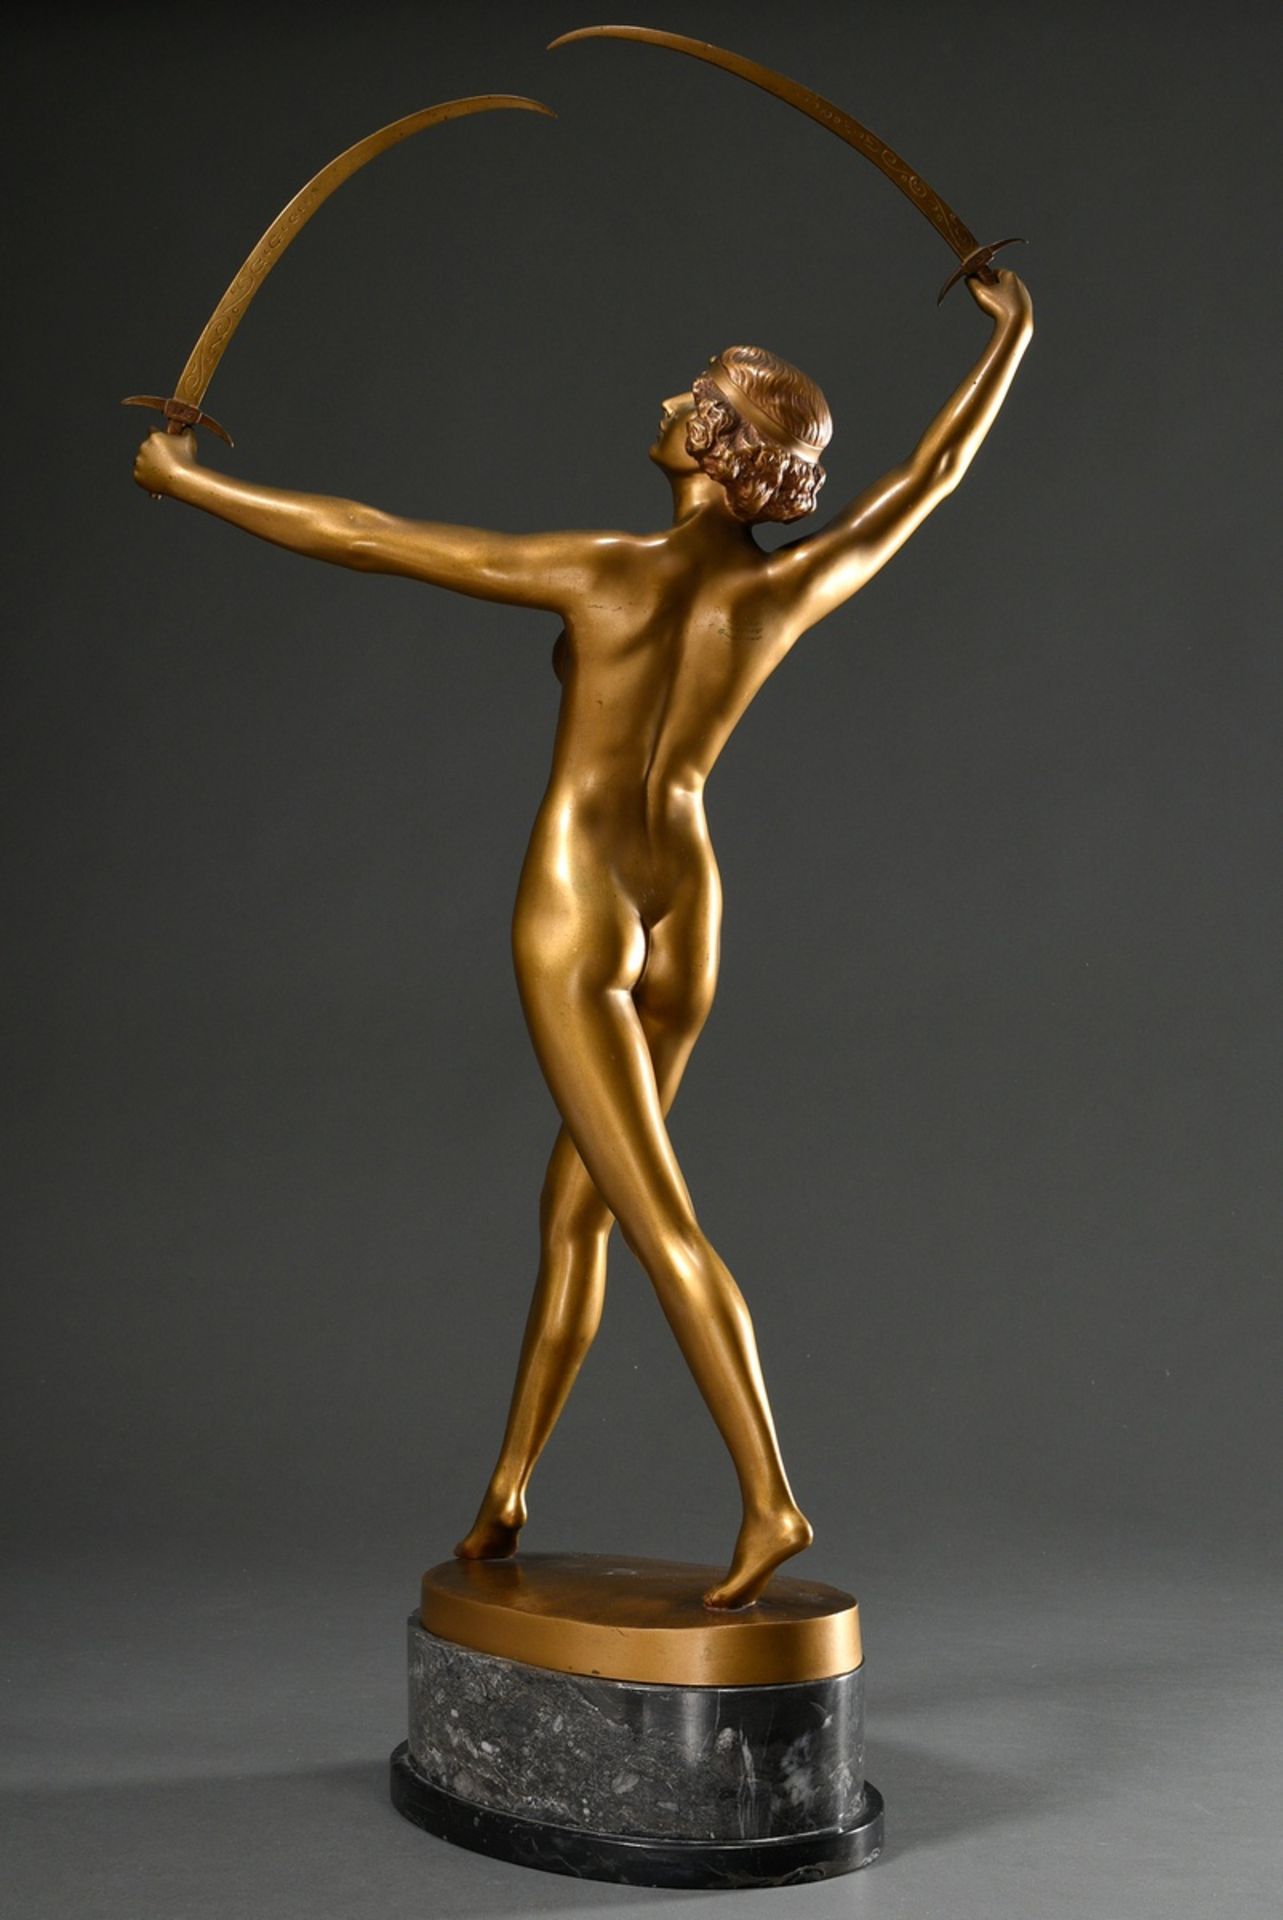 Jaeger, Gotthilf (1871-1933) "Sabre Dancer", around 1925, bronze with gold patina on grey marble pl - Image 7 of 10